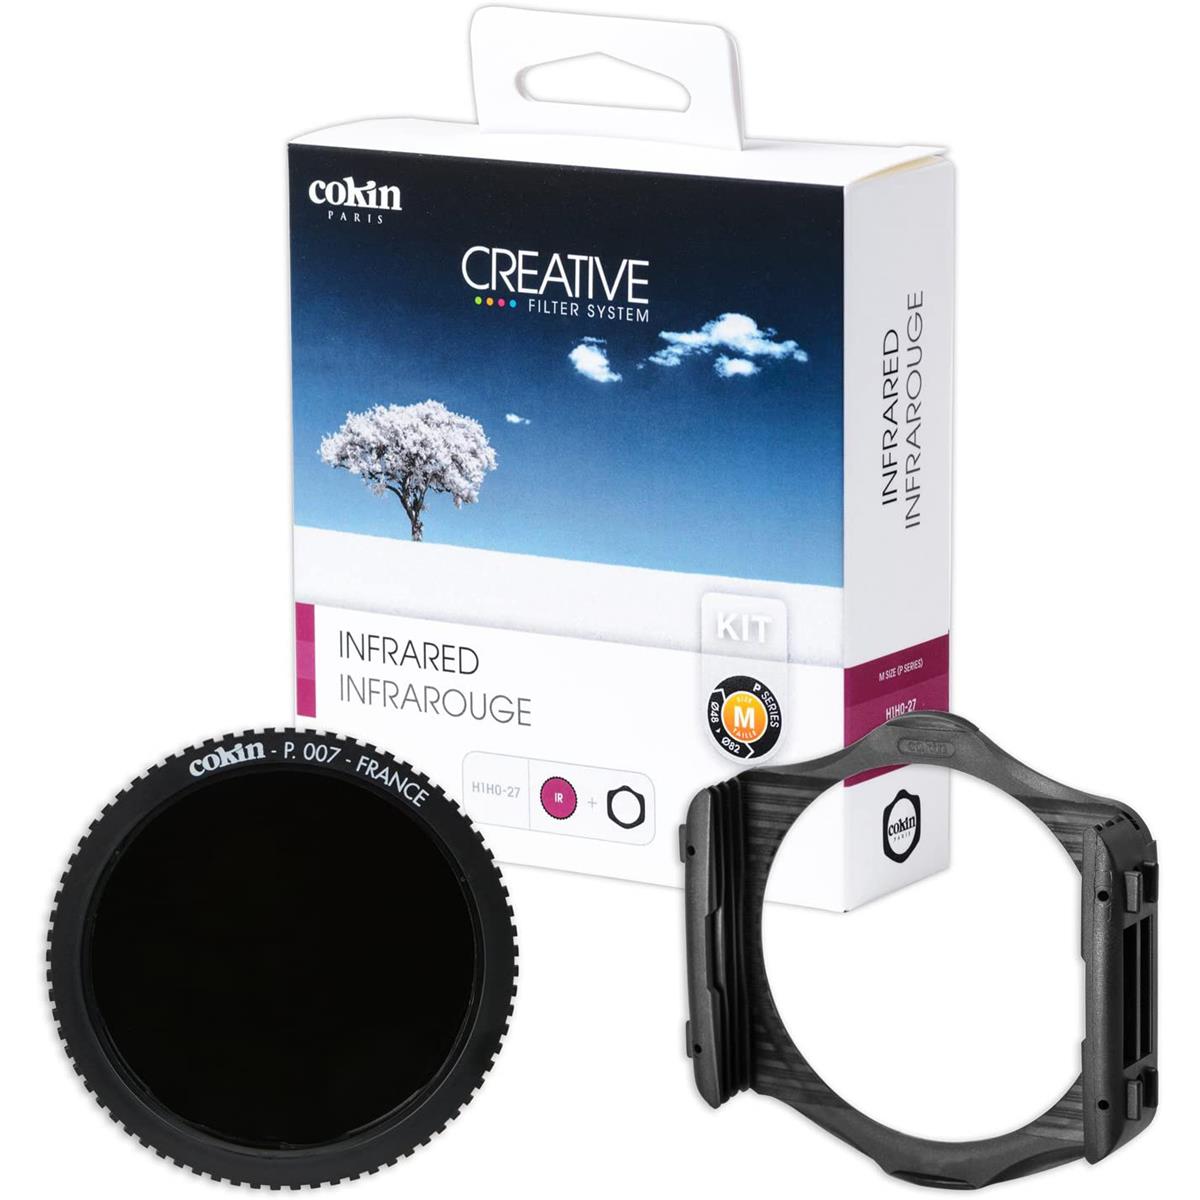 

Cokin Creative Infrared Filter Kit with P Series Filter Holder, Medium